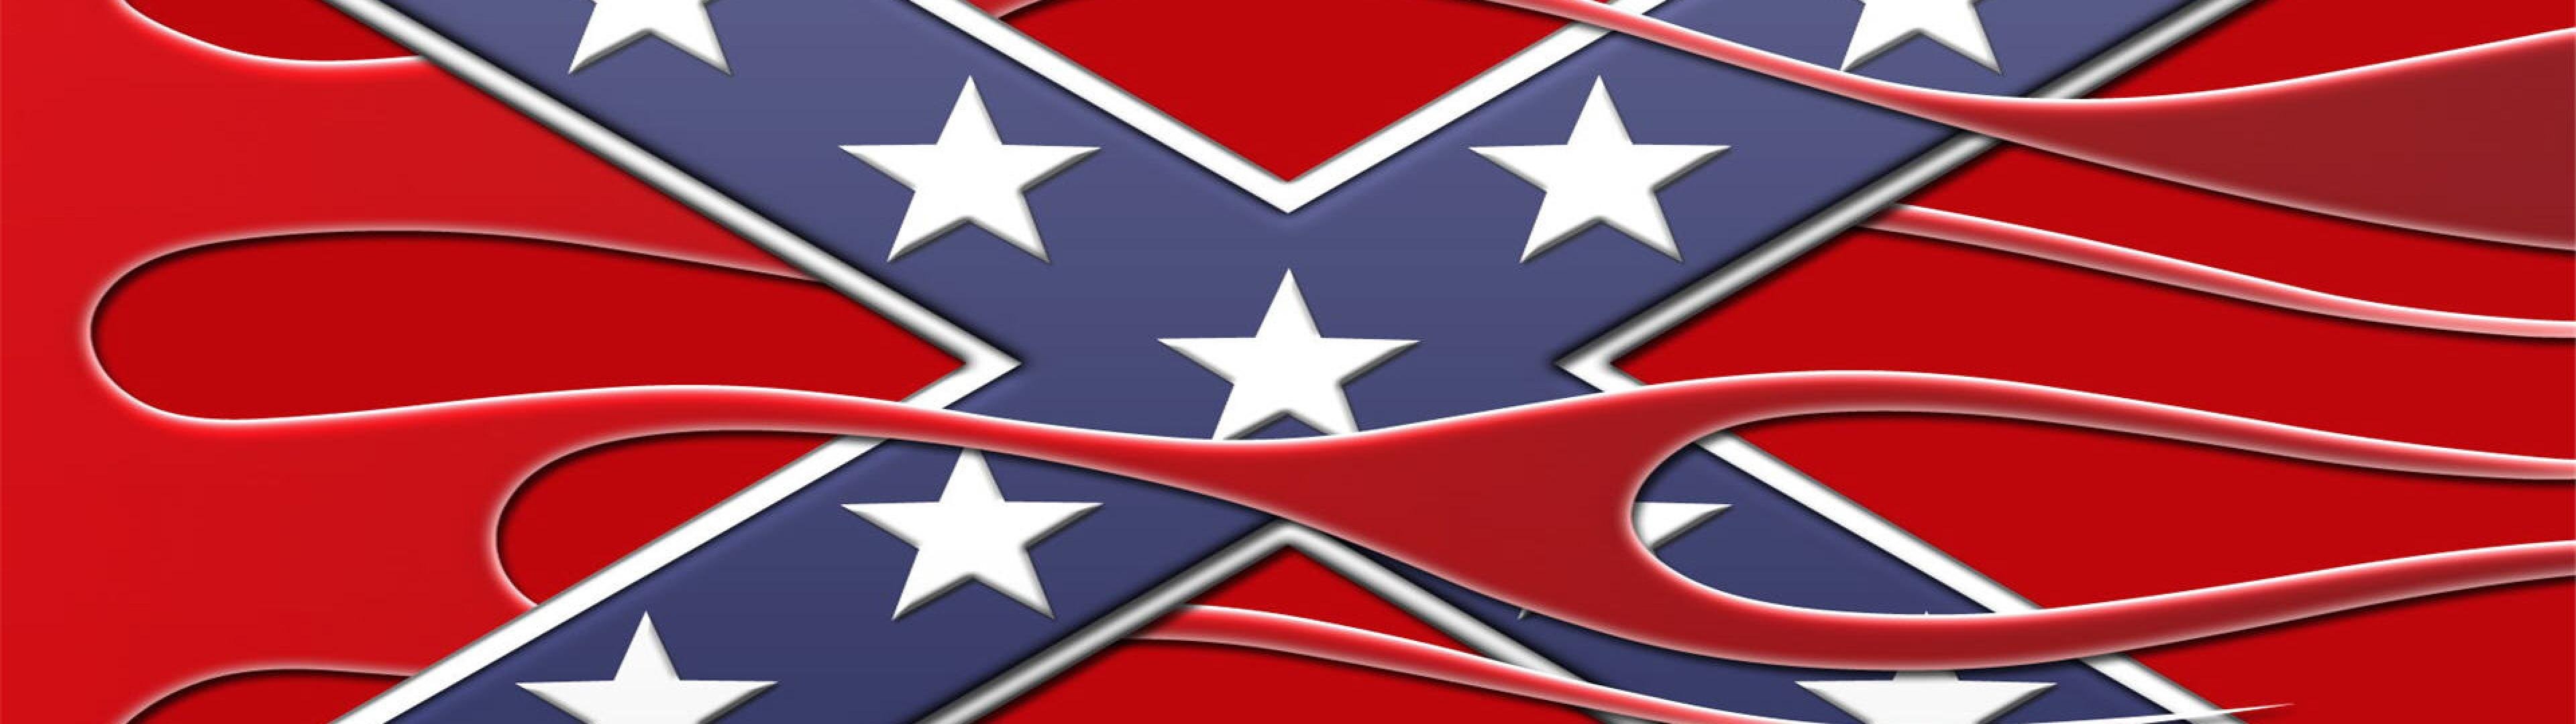 3840x1080 CONFEDERATE flag usa america united states csa civil war rebel dixie  military poster wallpaper |  | 742446 | WallpaperUP